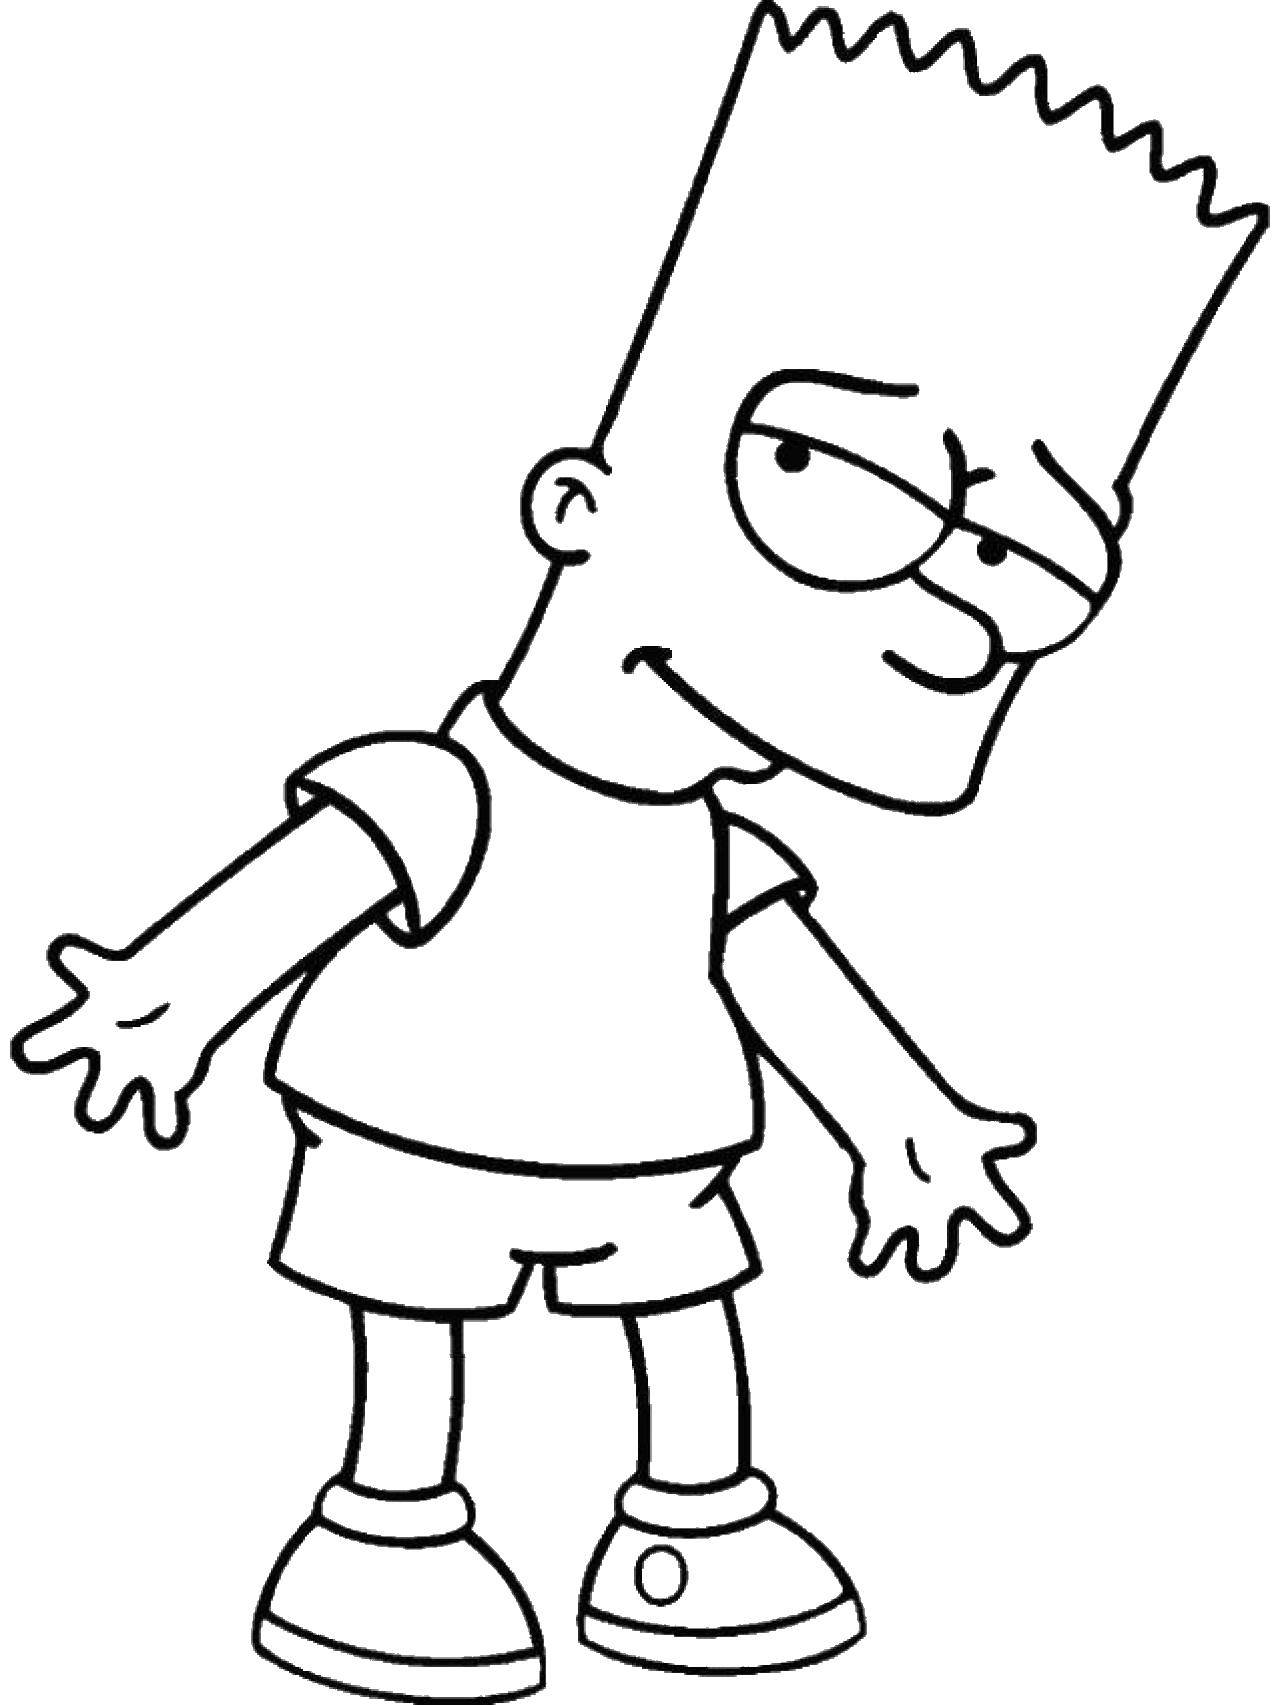 Coloring Bart Simpson. Category cartoons. Tags:  Cartoon character, Simpsons.